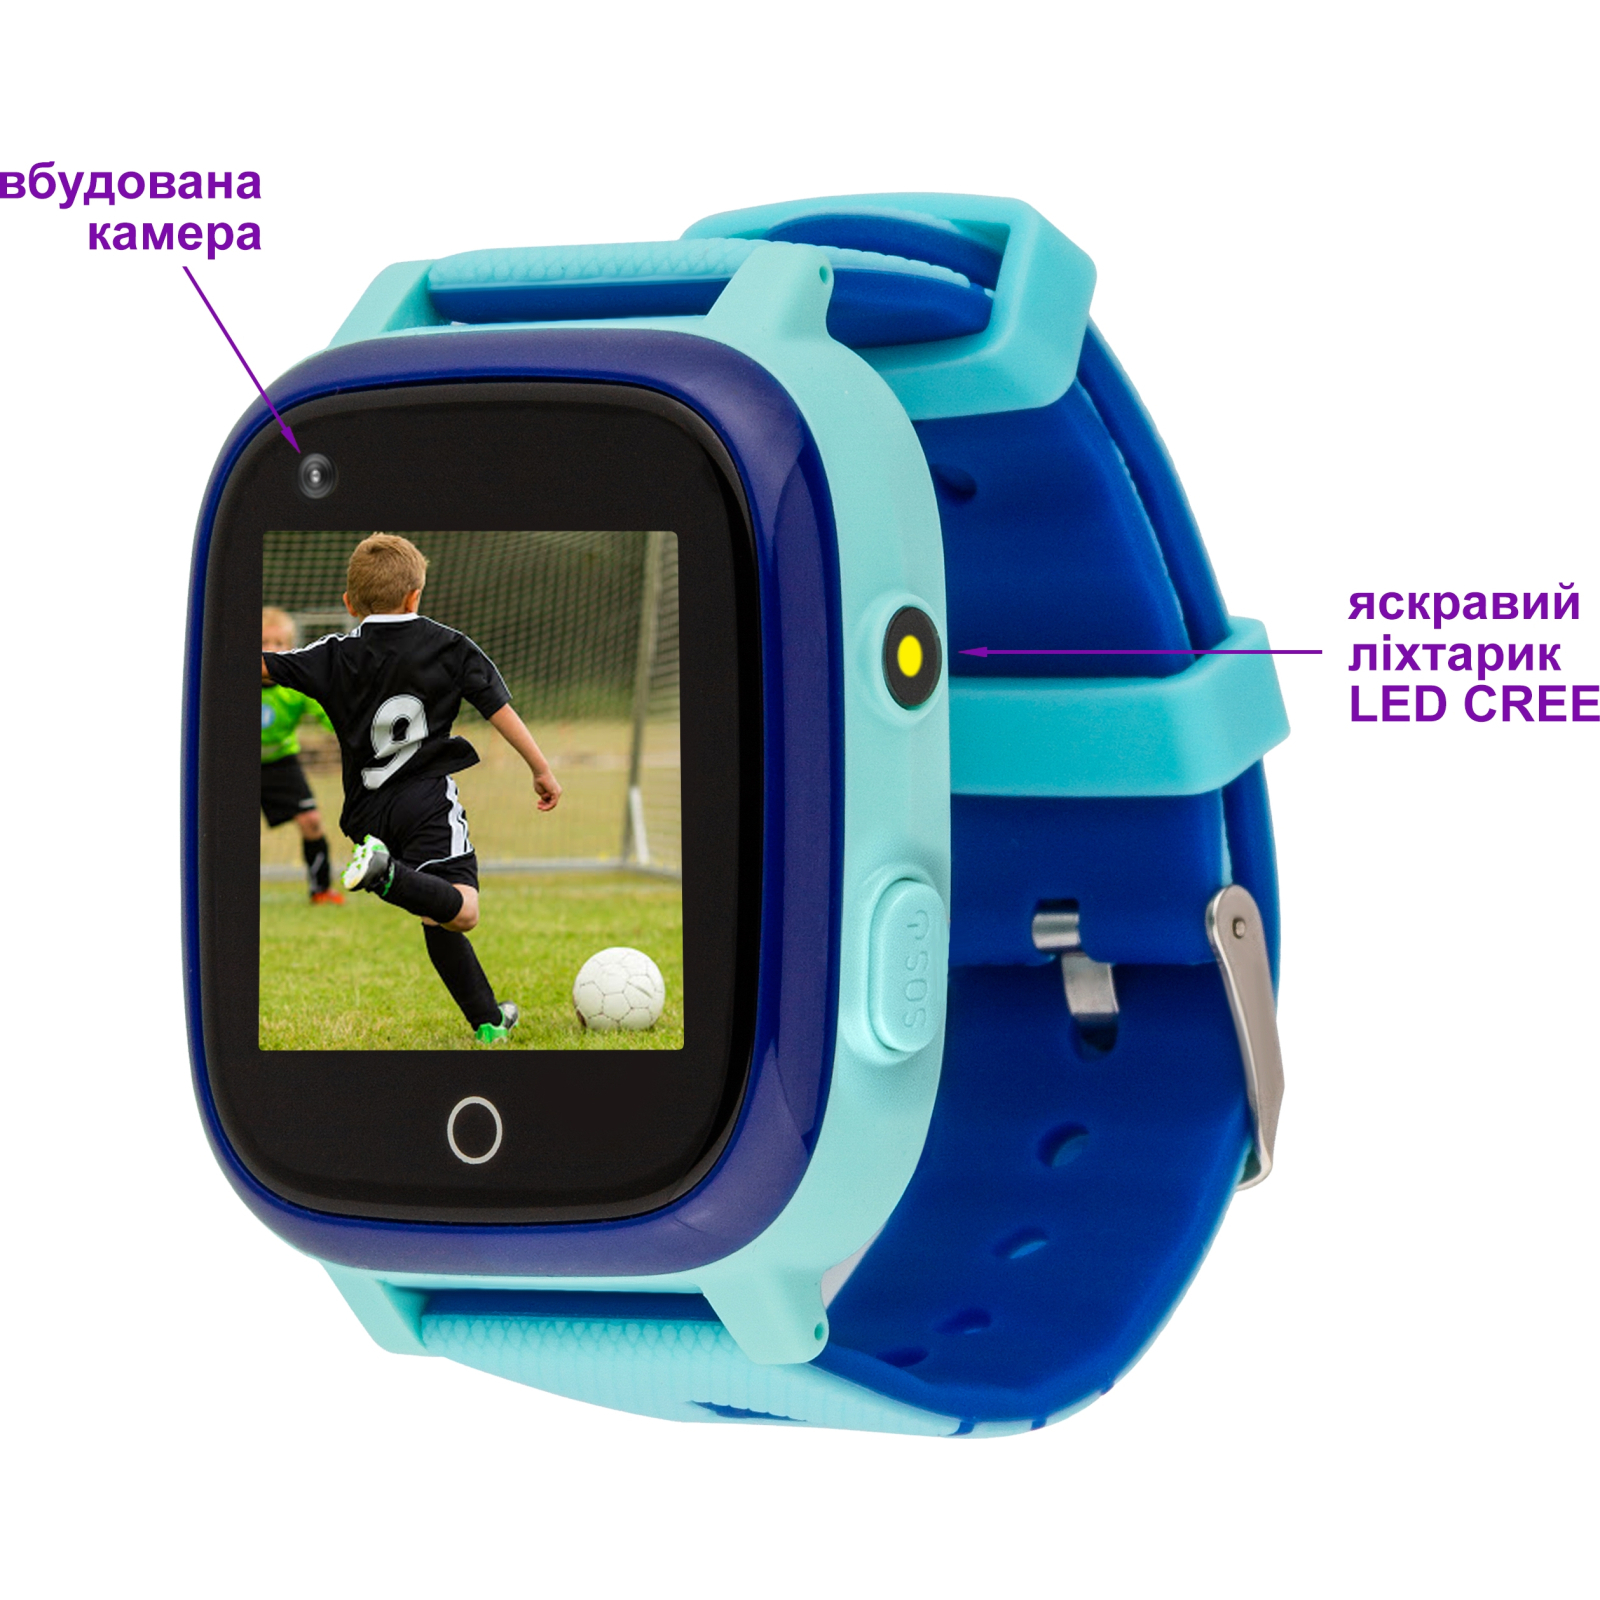 Смарт-часы Amigo GO005 4G WIFI Kids waterproof Thermometer Blue (747017) изображение 4